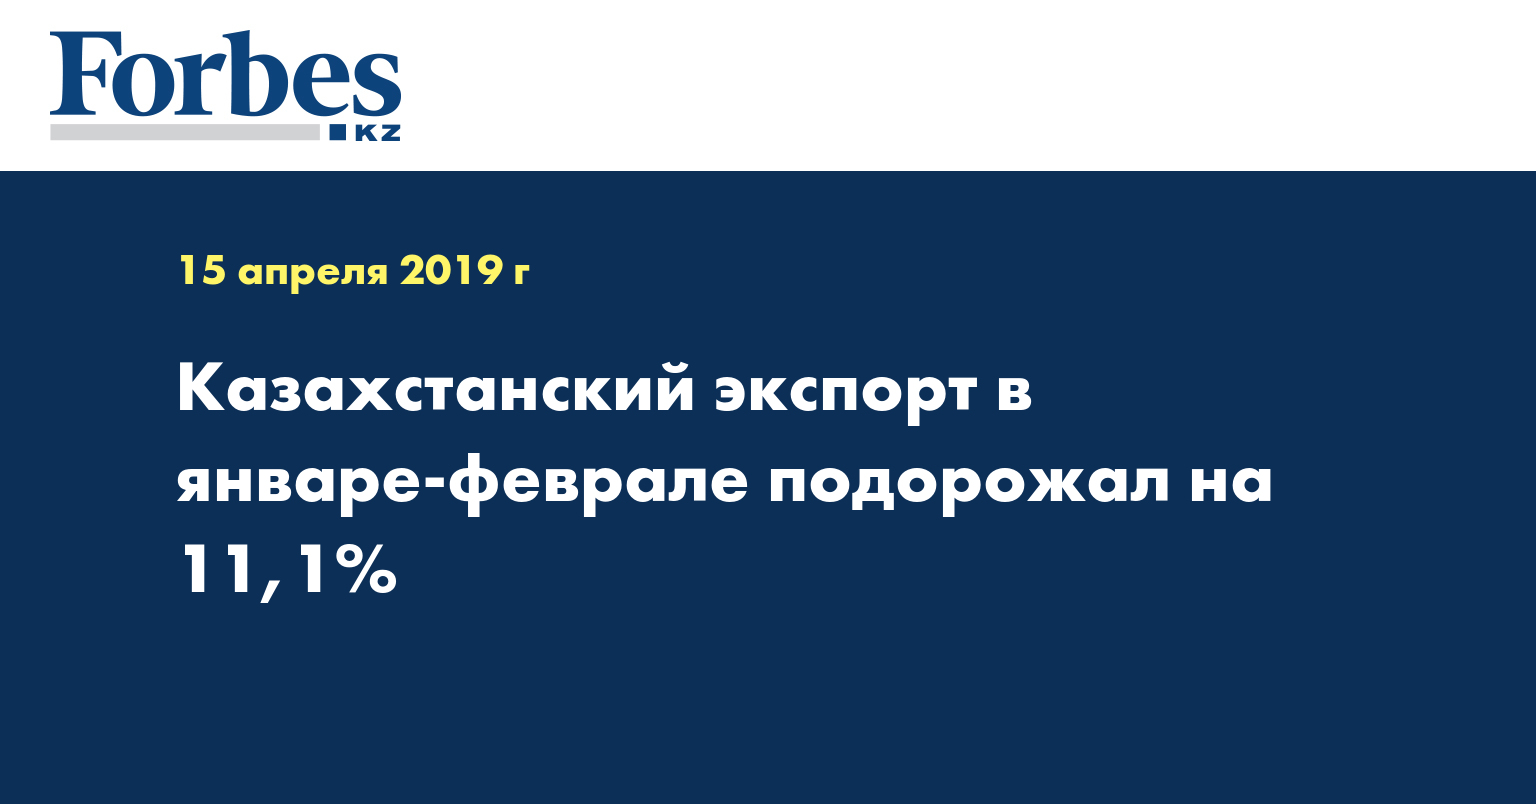  Казахстанский экспорт в январе-феврале подорожал на 11,1%